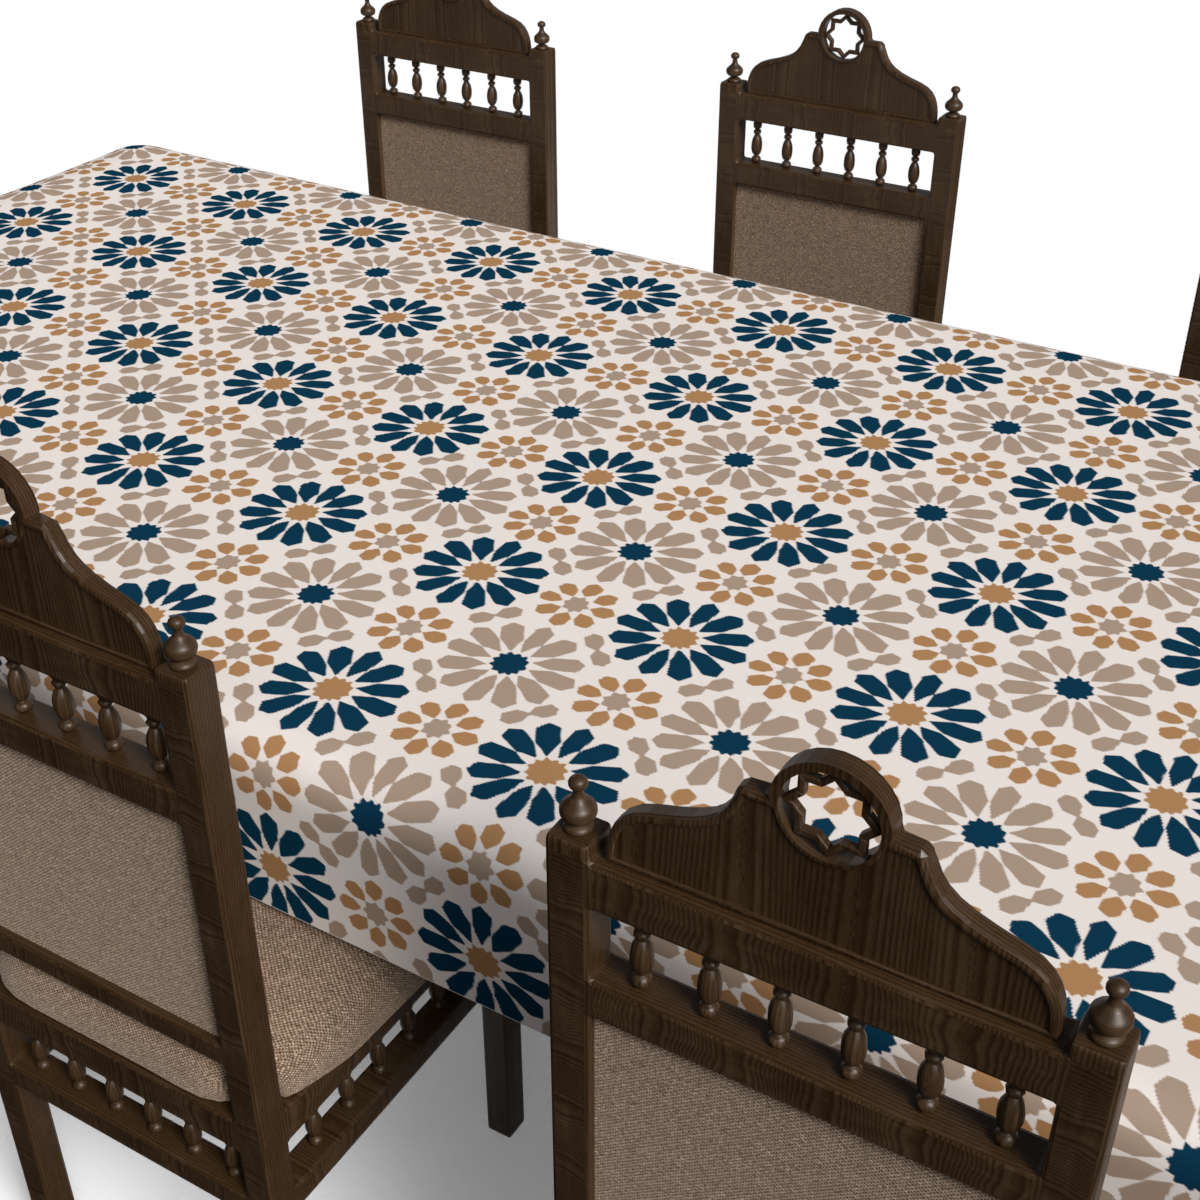 Ace 2 Tablecloth